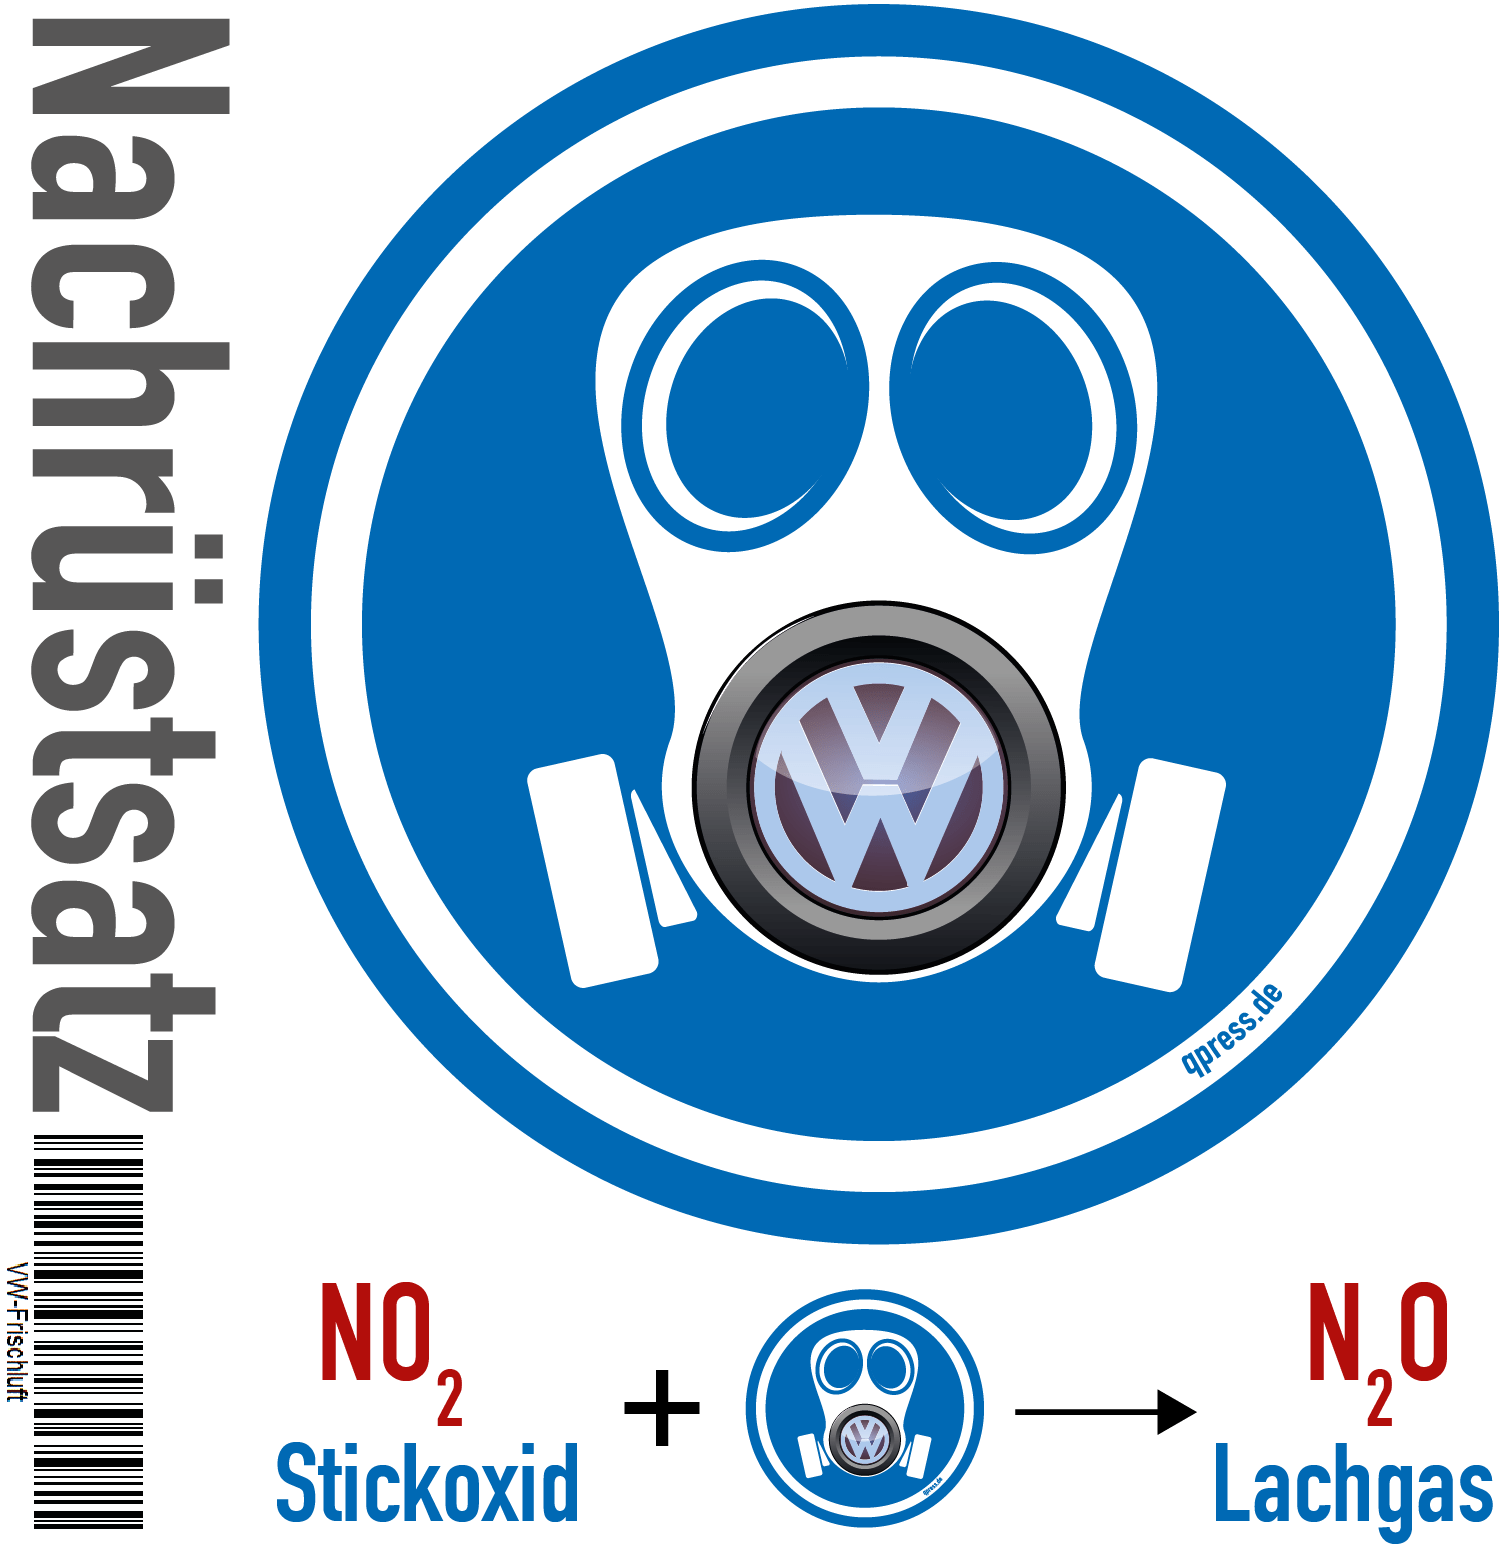 VW Abgasskandal technik Abgas Lachgas Stickoxid Erfindergeist guenstigere Loesung Auto Automobil Gasmaske qpress